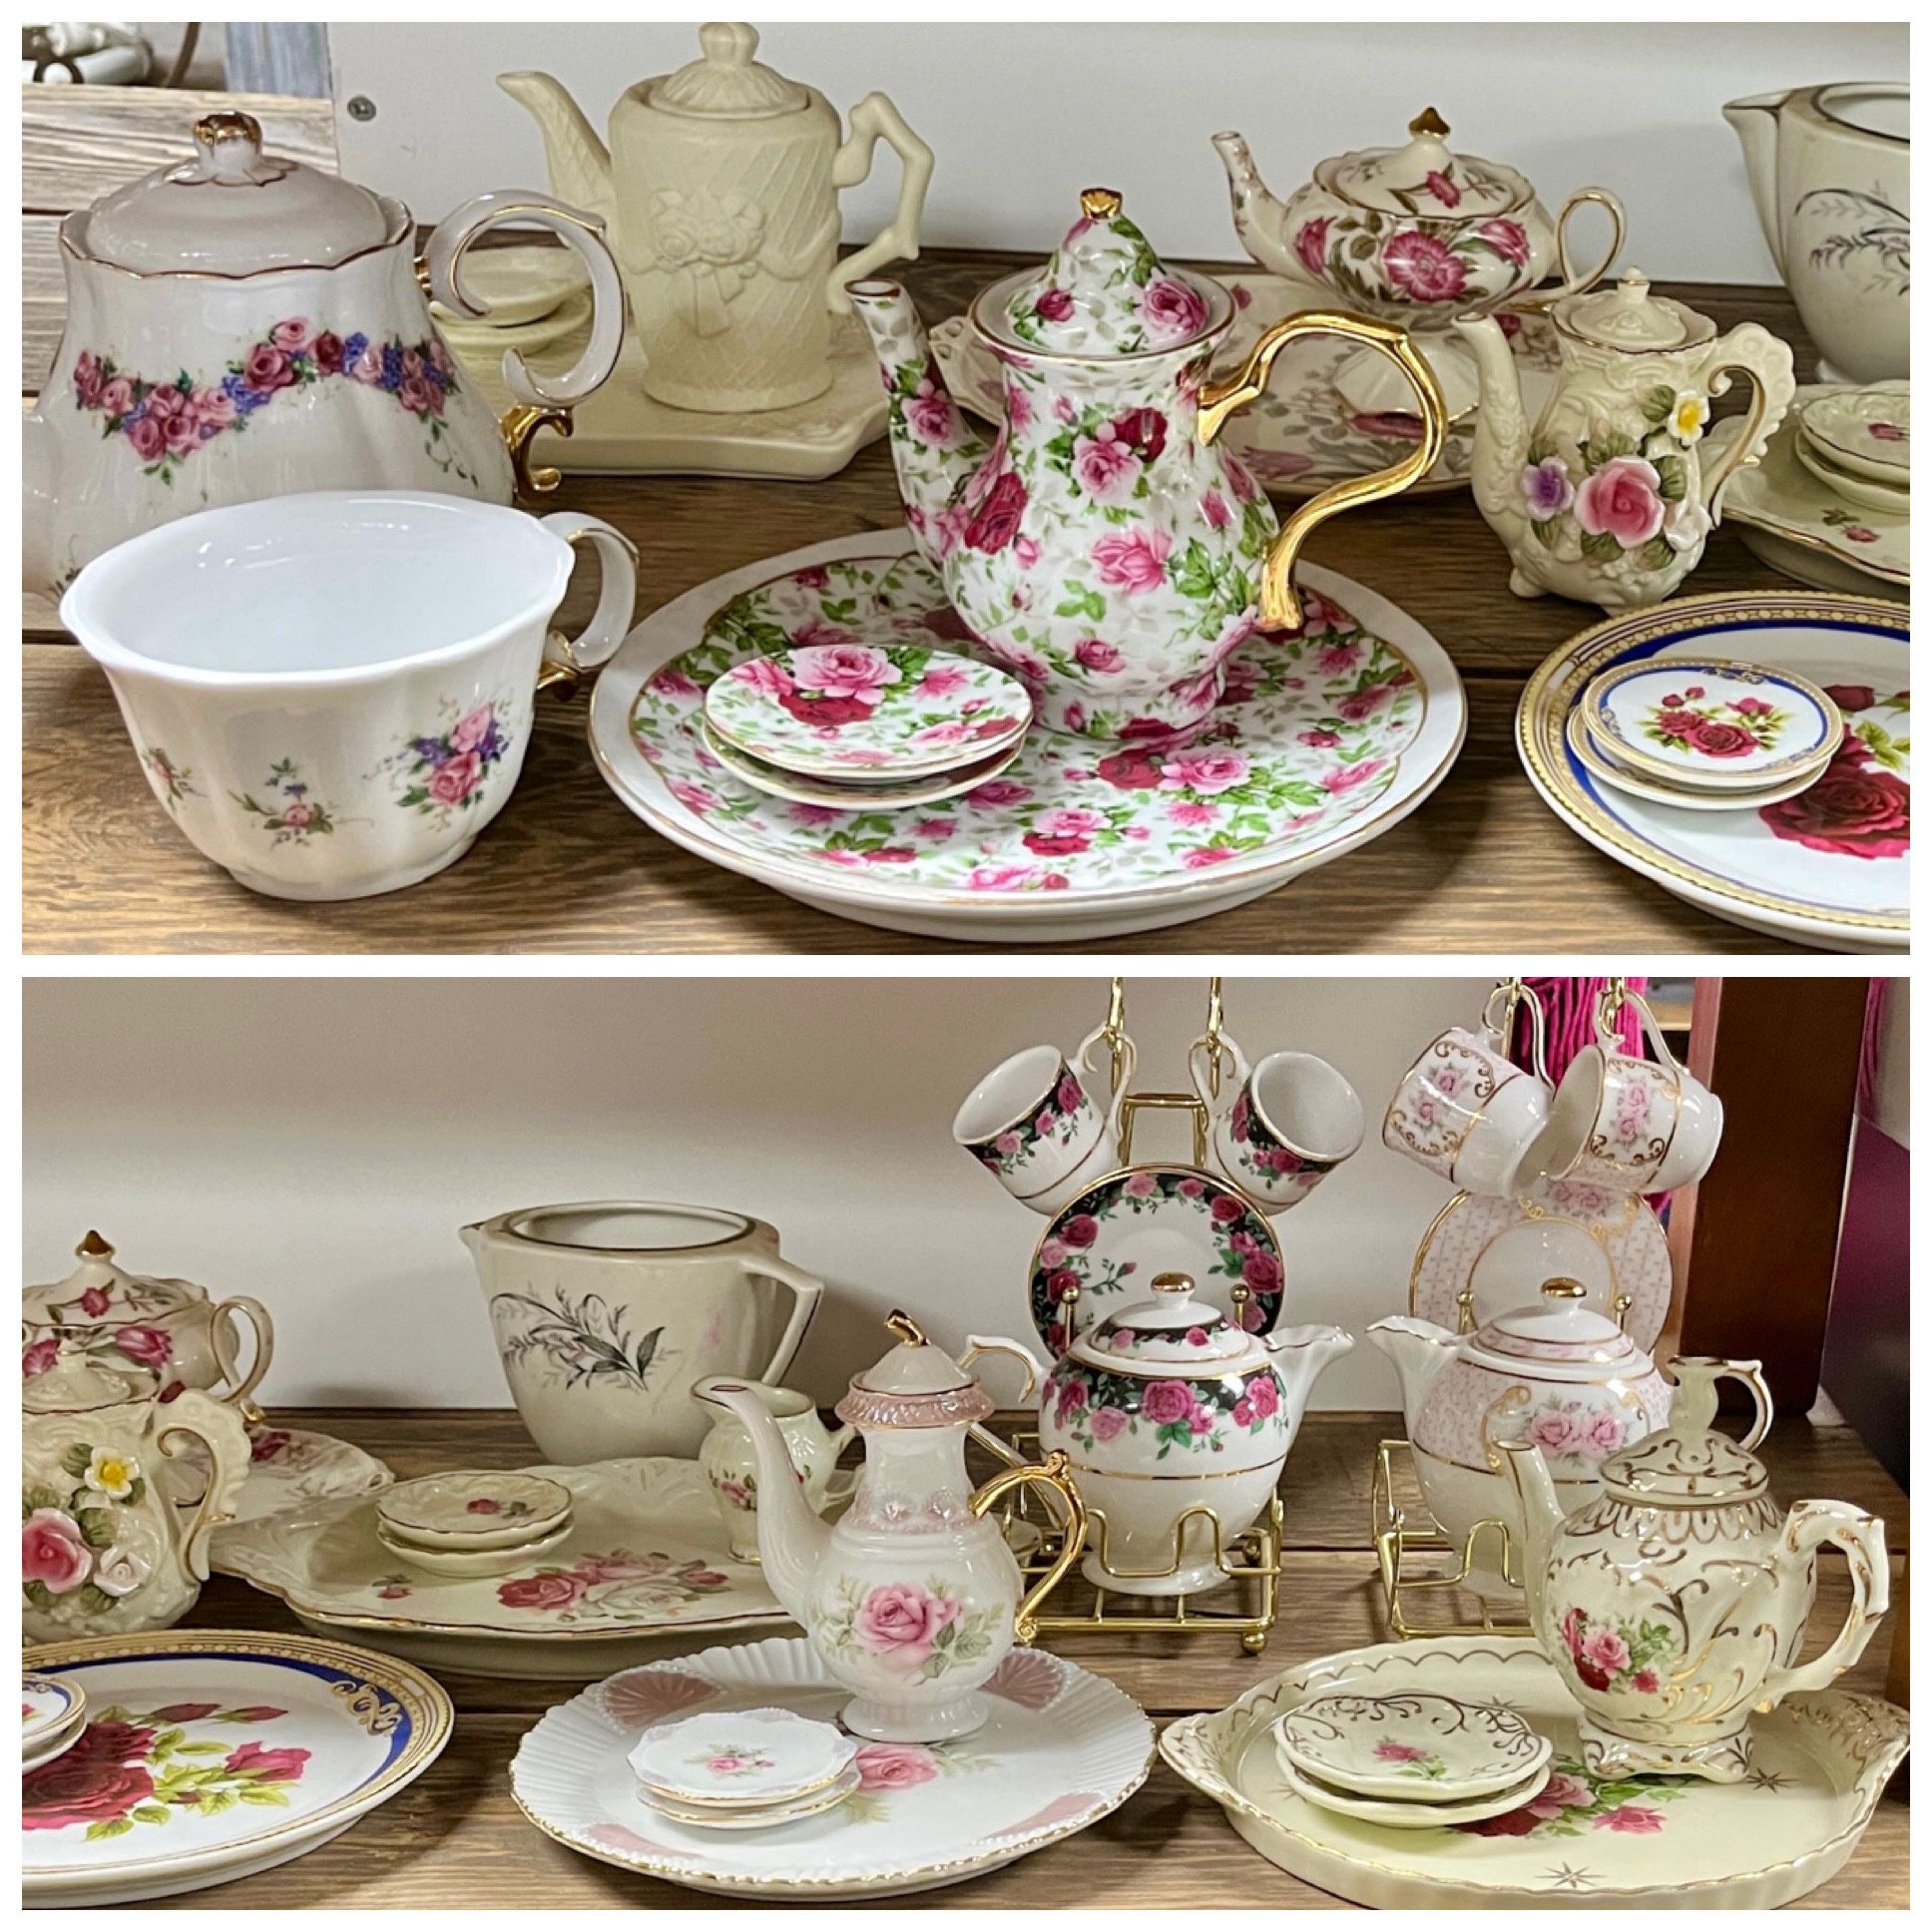 Miniature Tea Sets. Average size: Tea Pot 4”, Large Plate 6”, Small Plate 2”. $5 each